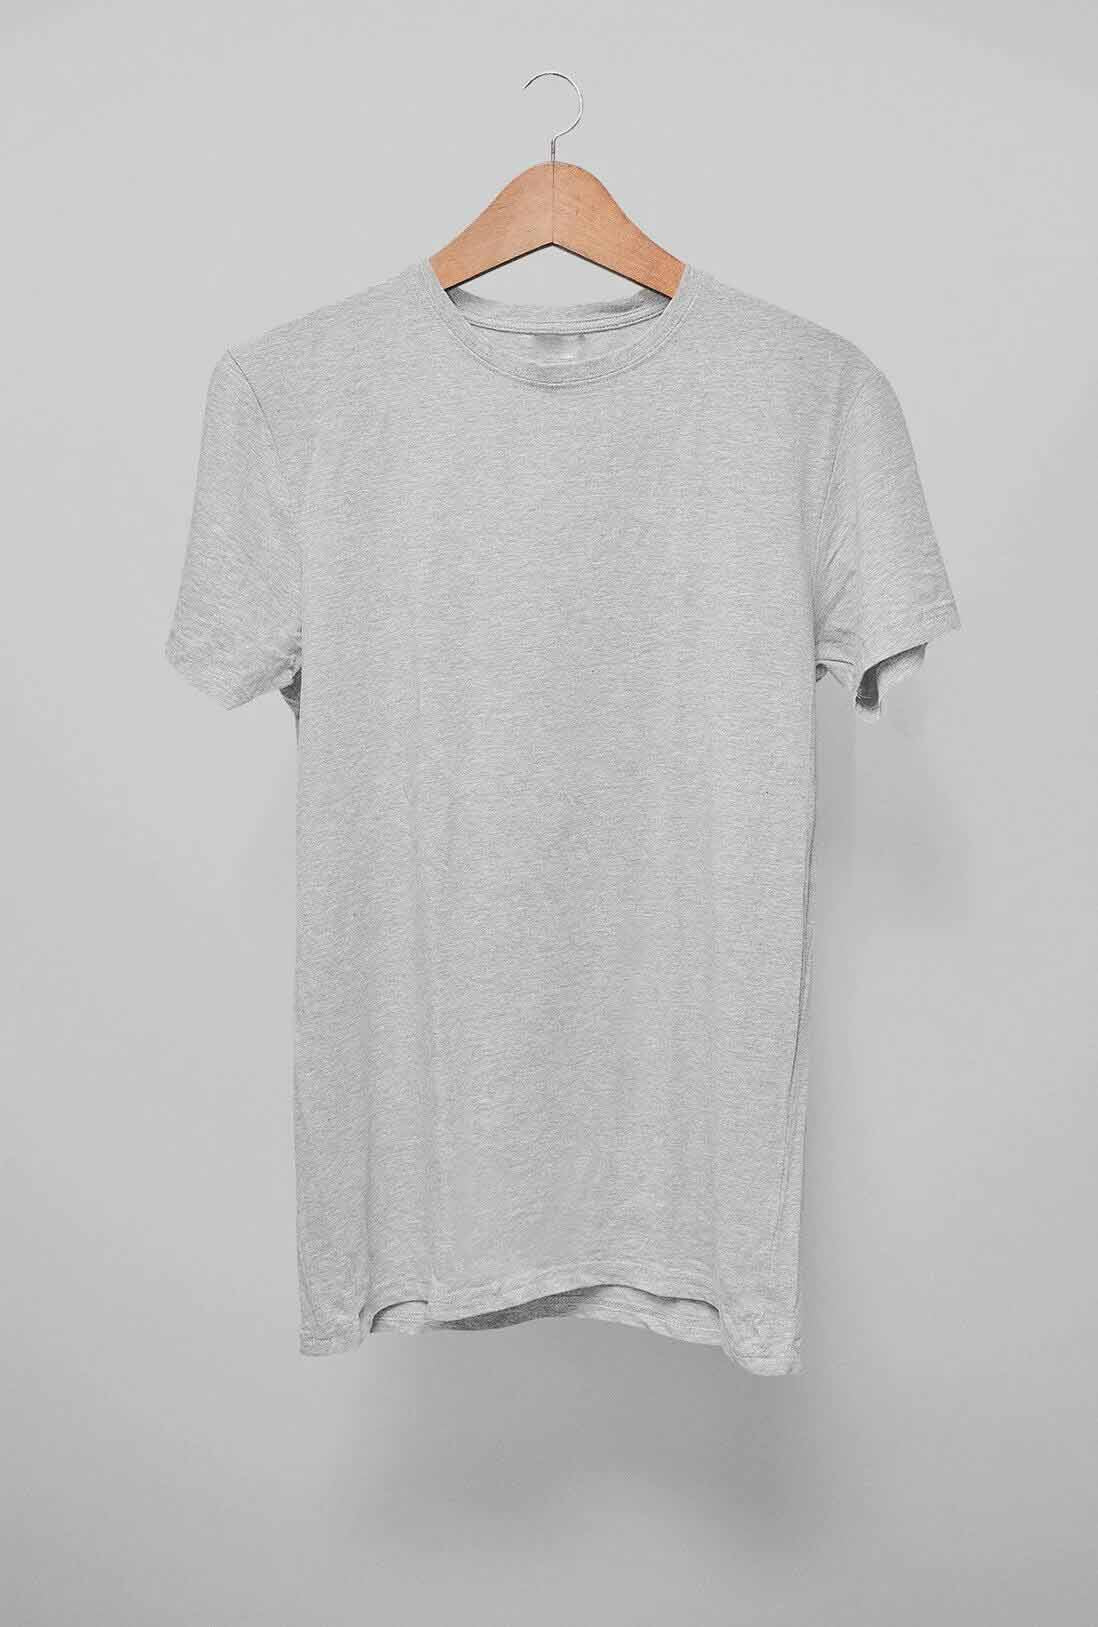 Men's Light Grey Cotton T-Shirt